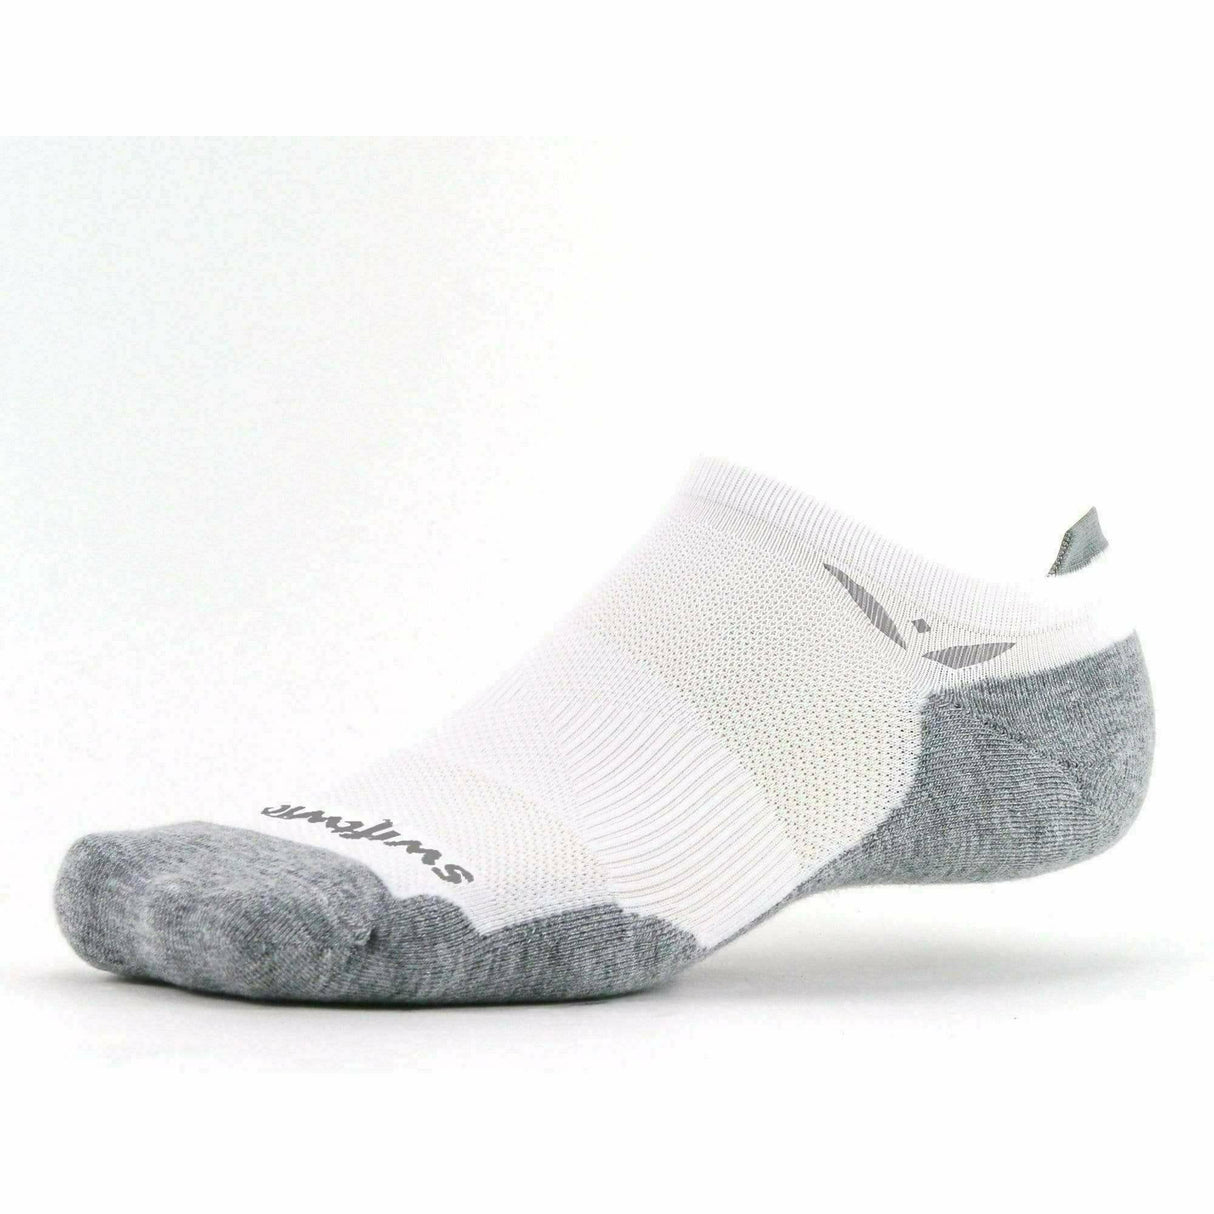 Swiftwick Maxus Zero No Show Tab Socks  -  Small / White